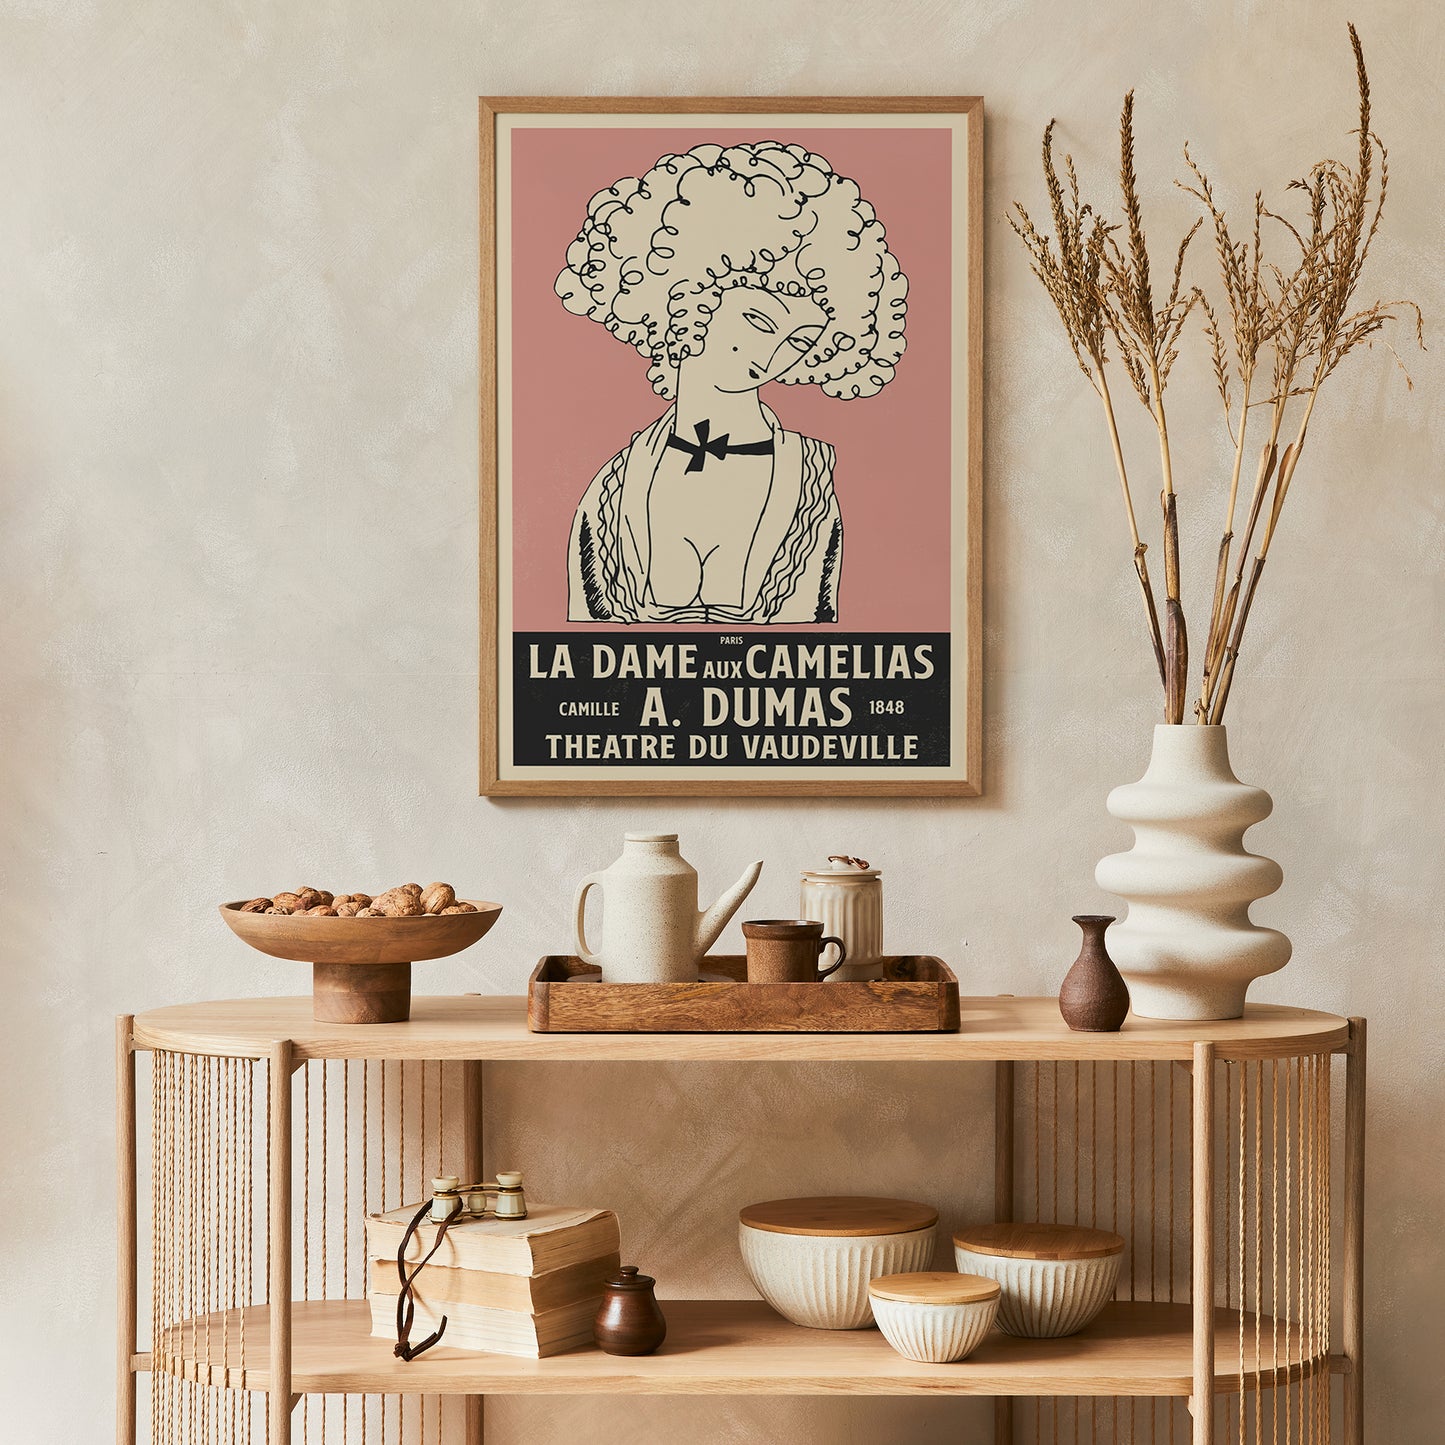 A. Dumas, Camille Poster